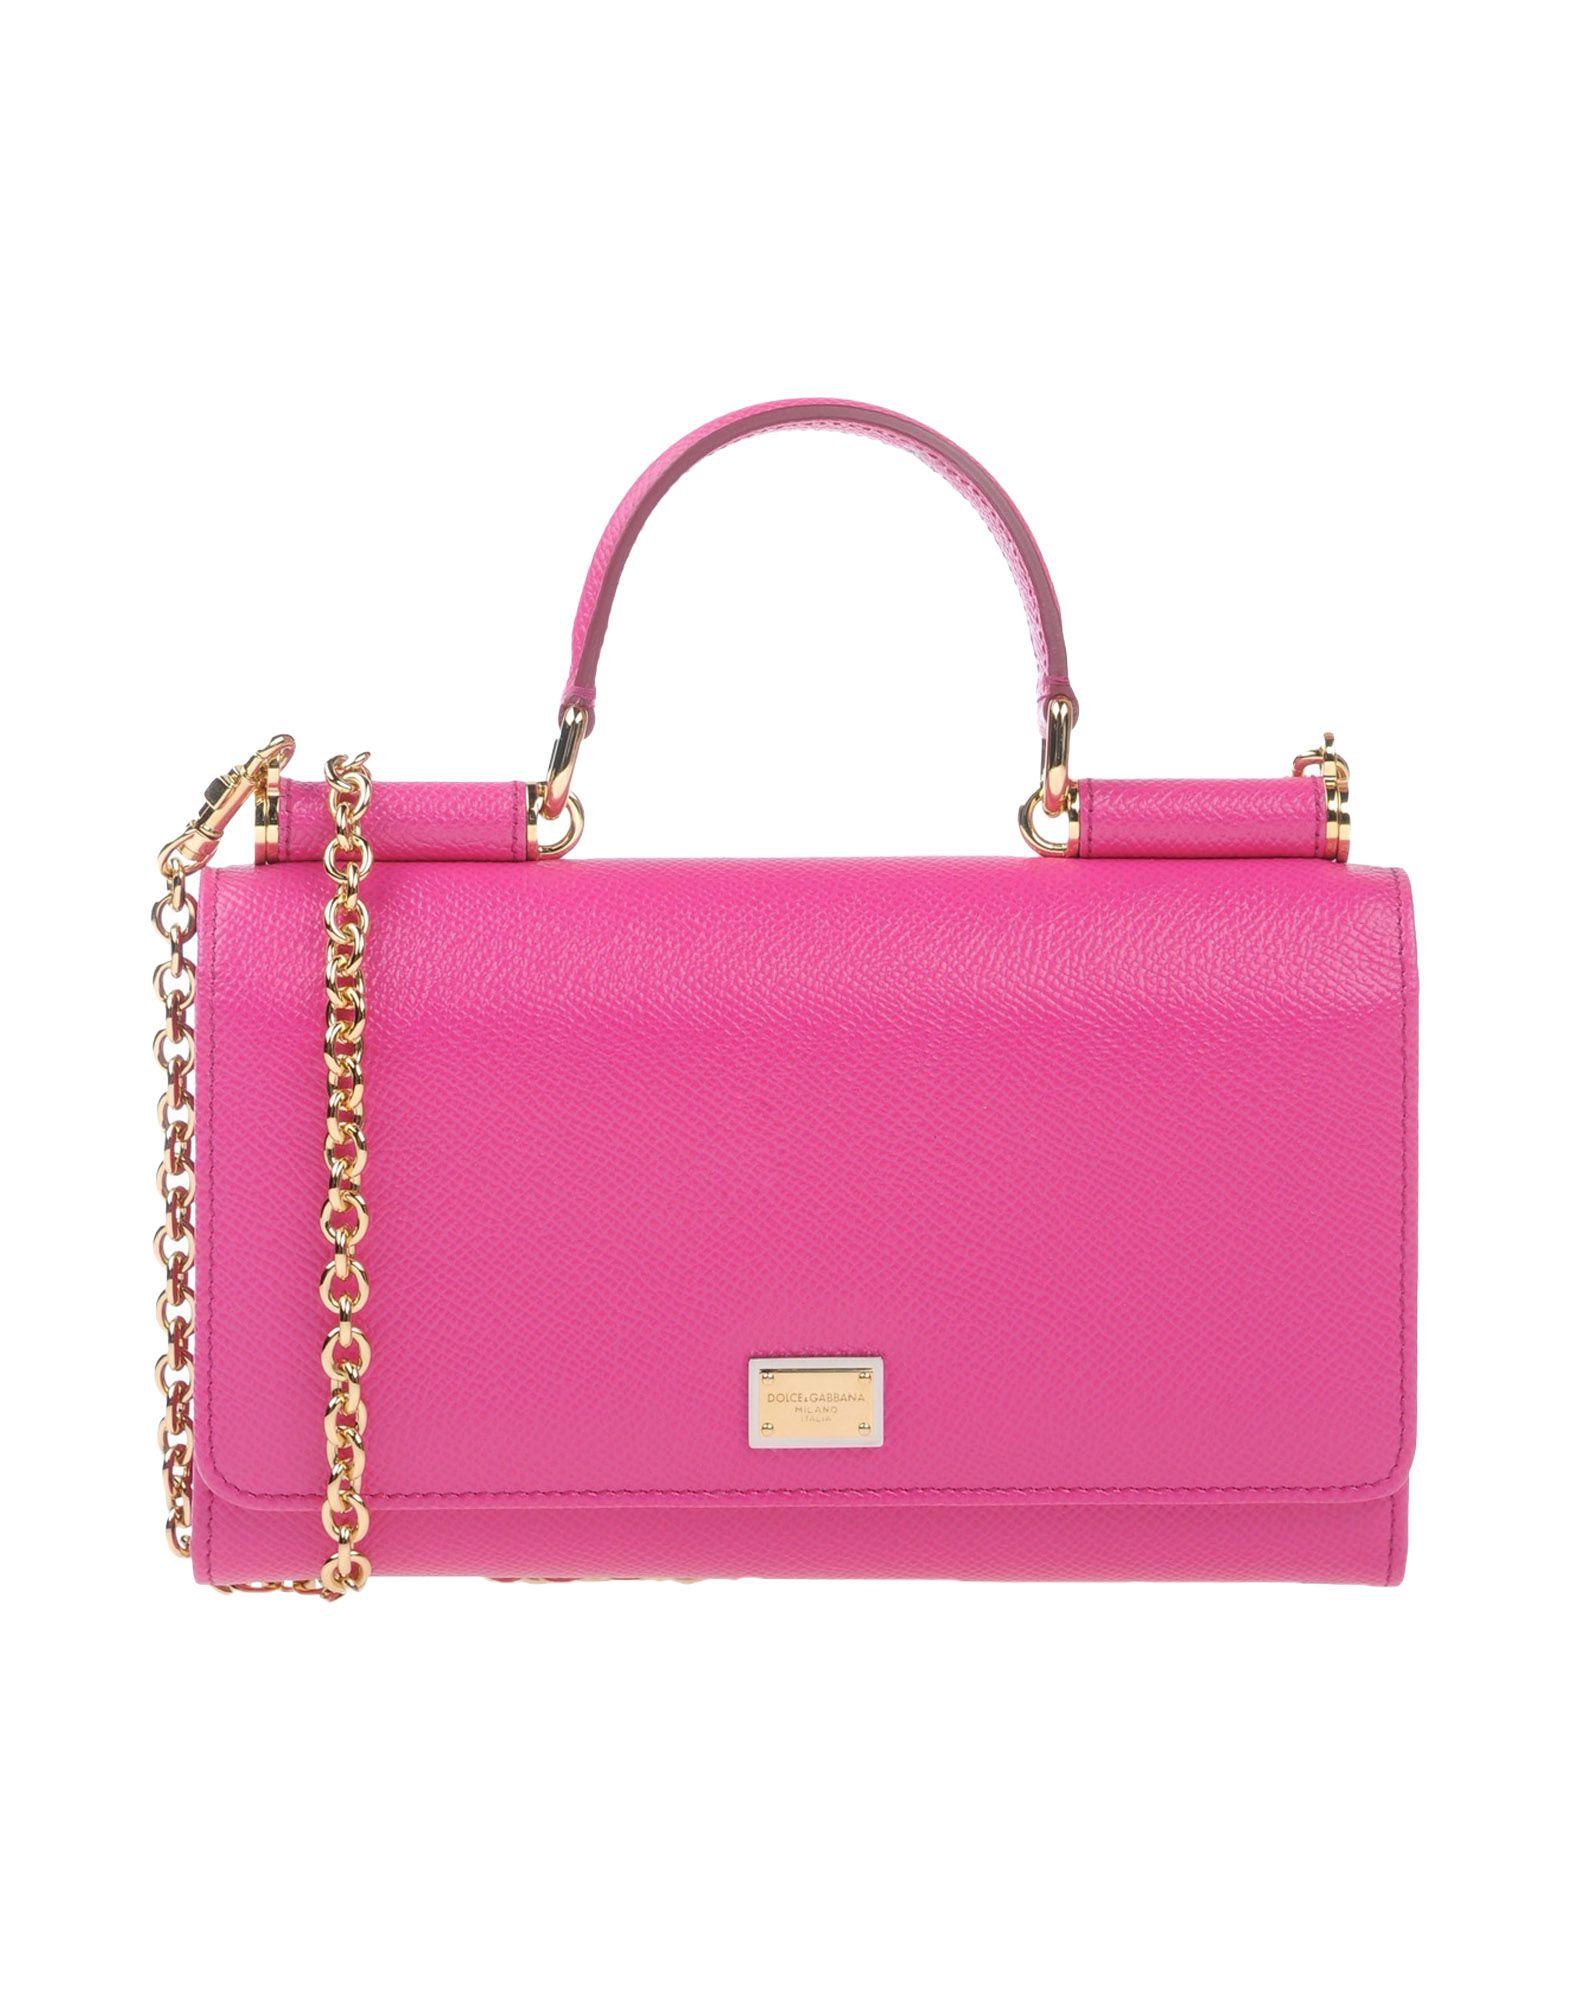 Dolce & Gabbana Handbags In Fuchsia | ModeSens